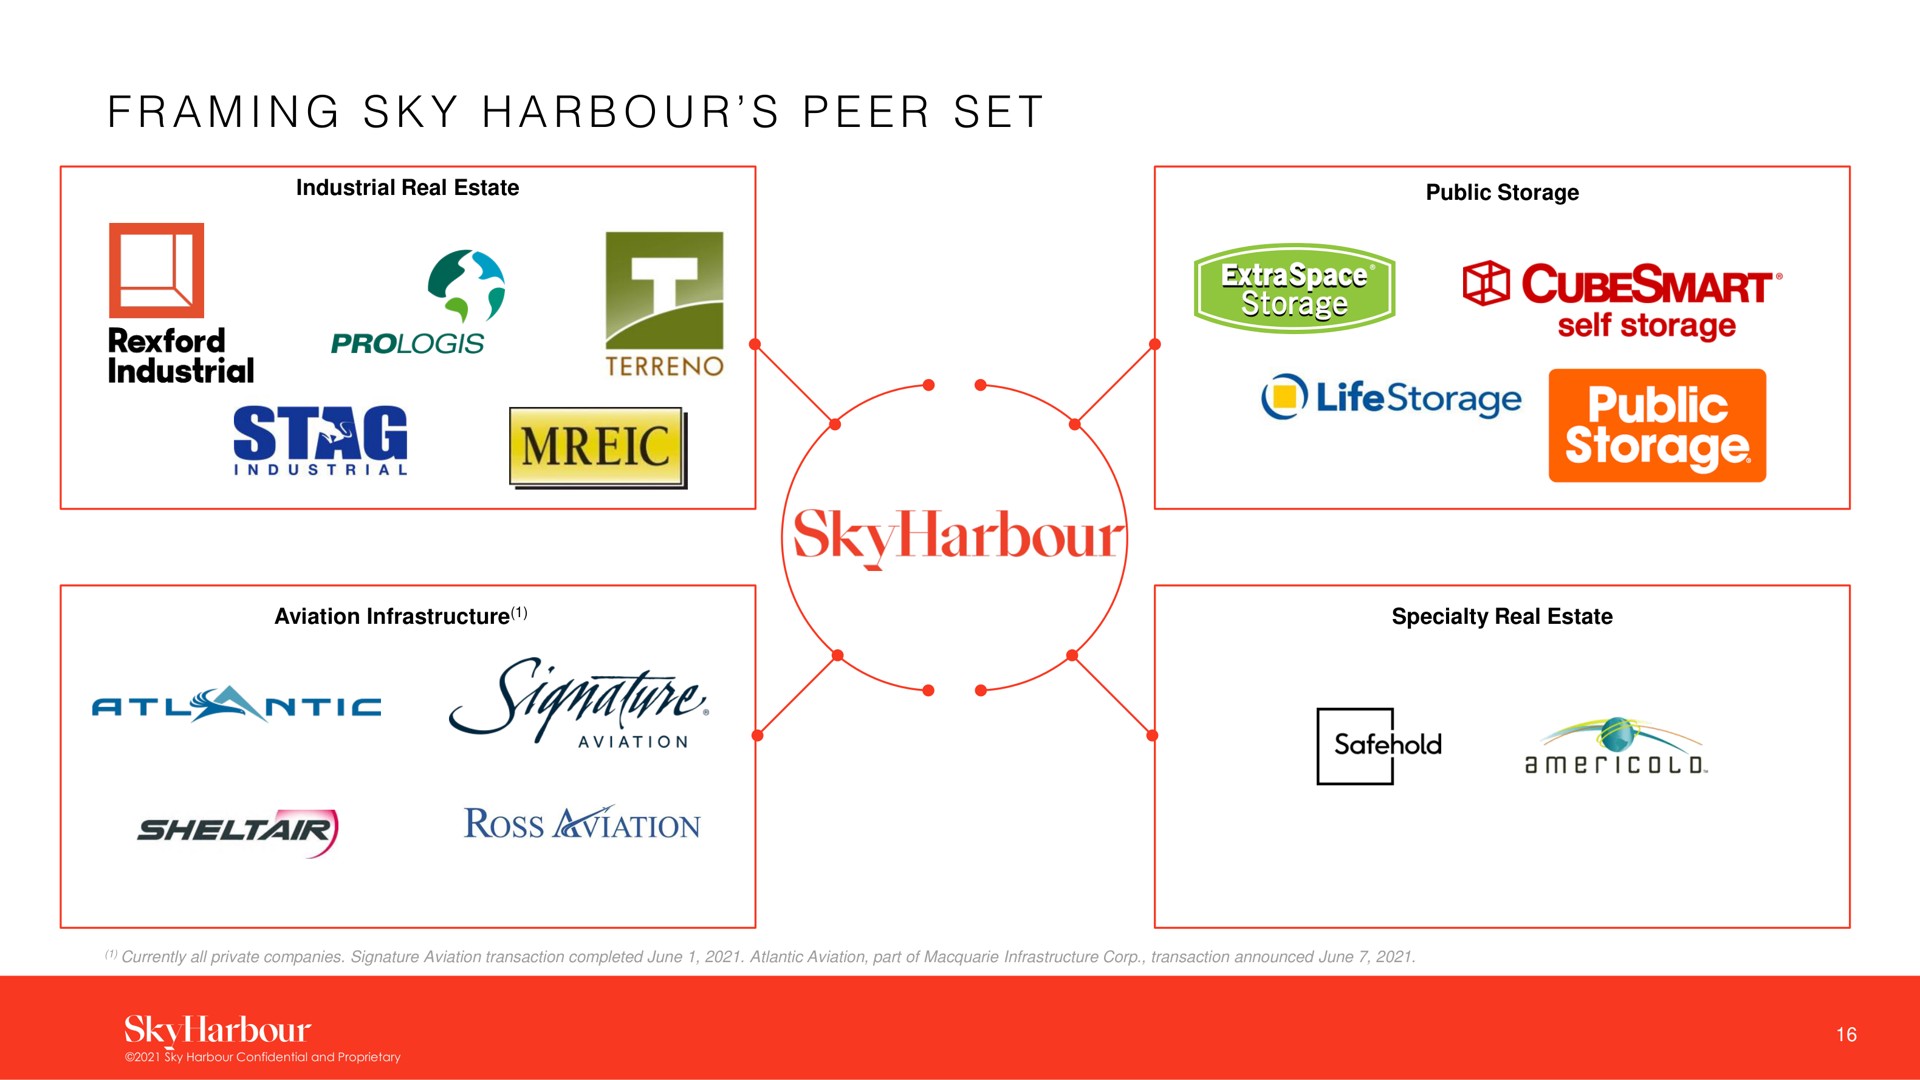 a i a framing sky harbour peer set stag public storage side ross aviation safehold | SkyHarbour